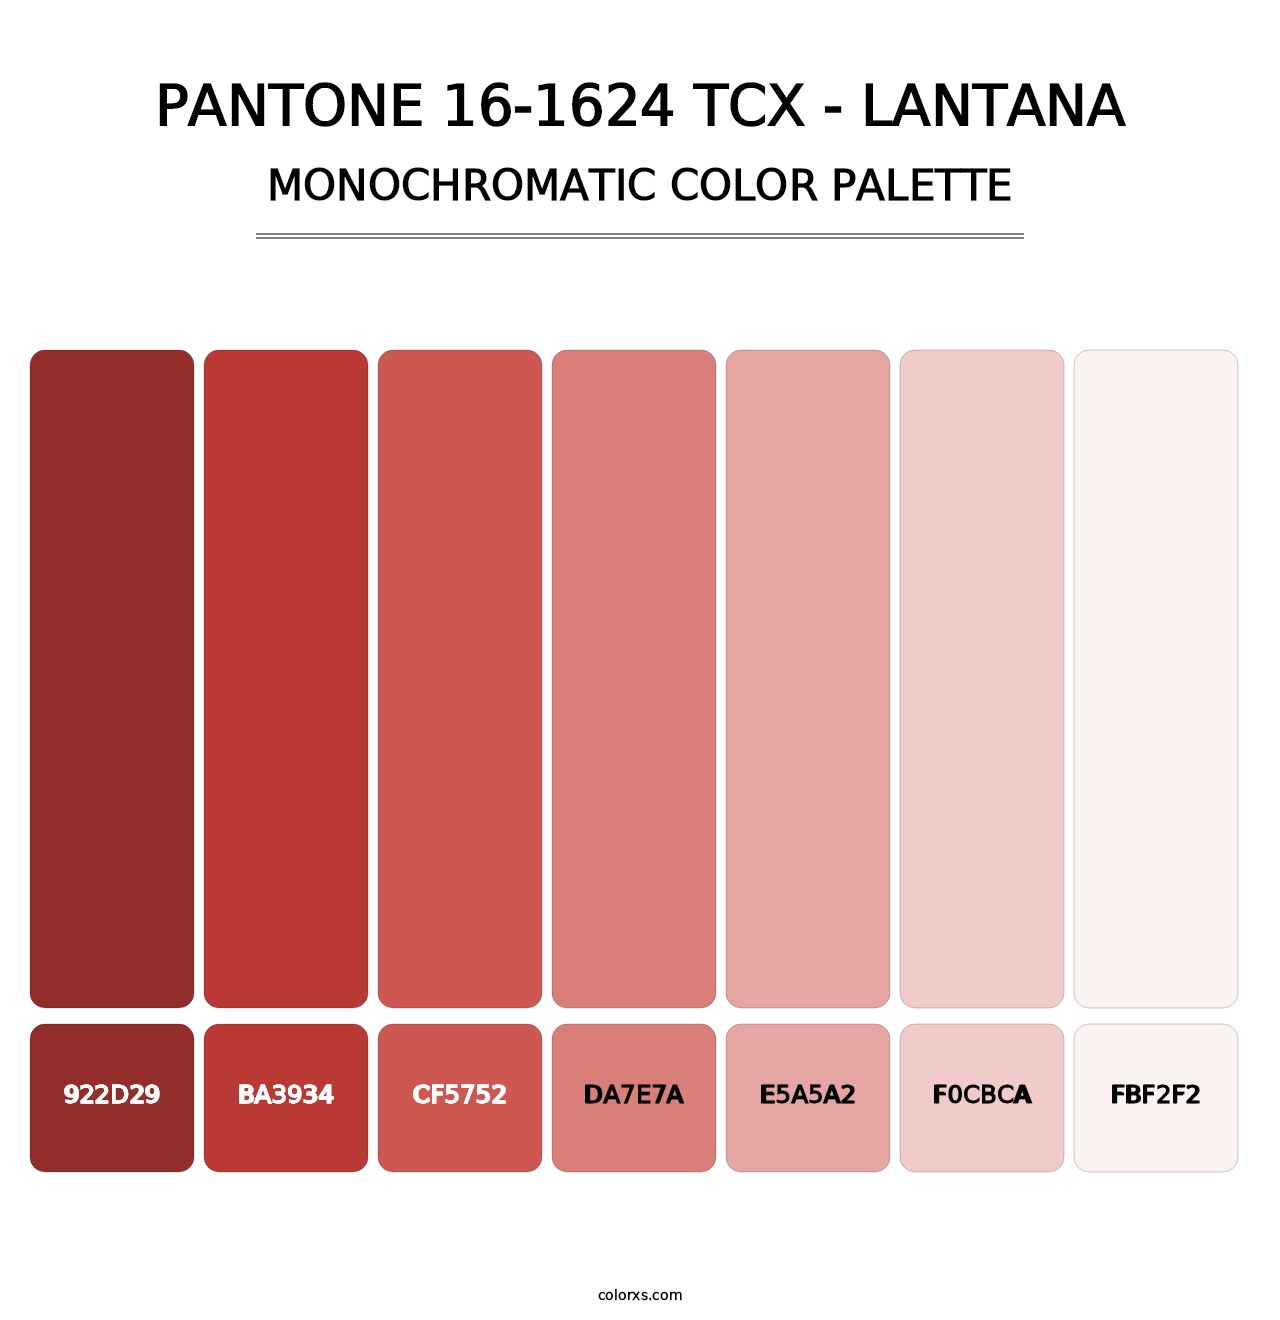 PANTONE 16-1624 TCX - Lantana - Monochromatic Color Palette